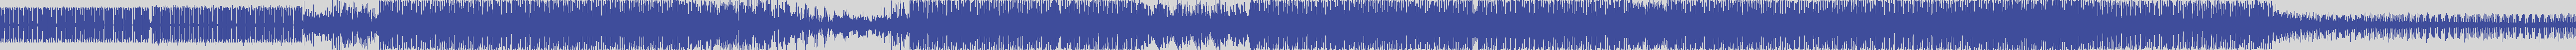 atomic_recordings [AR019] Paul Cutiè, Cj Faver - Talk [90s Mix] audio wave form